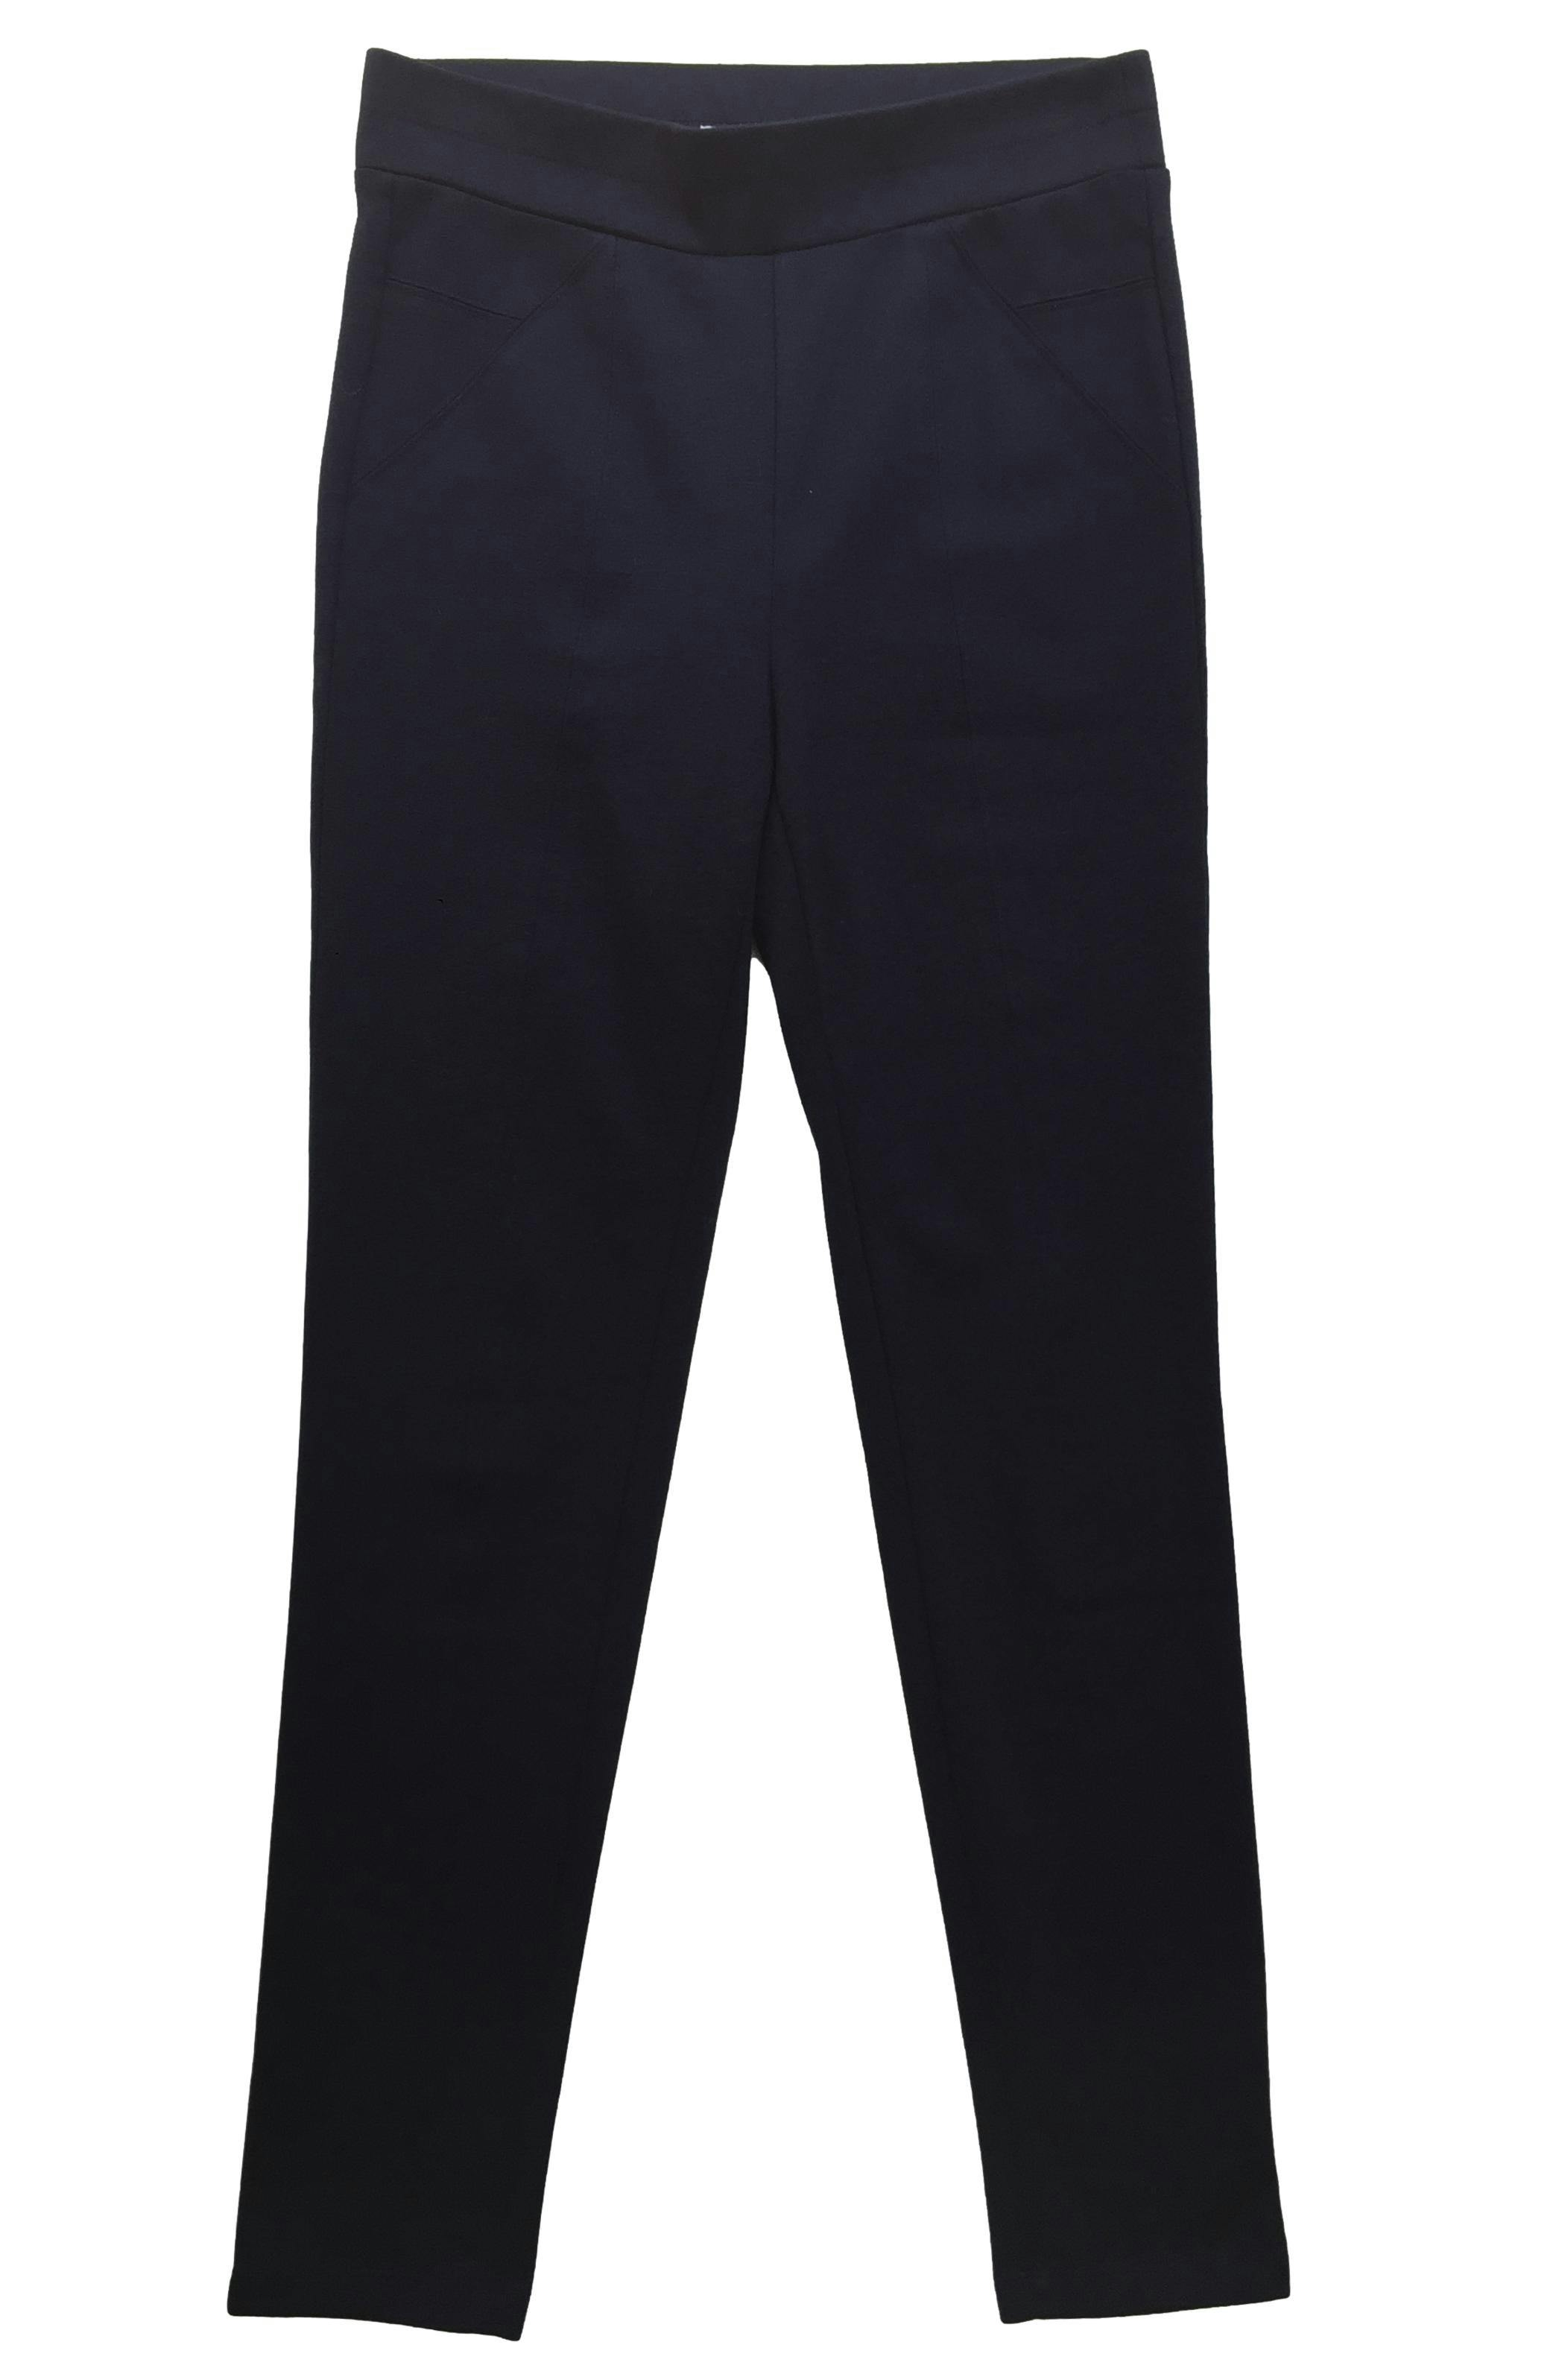 Pantalón Sfera azul marino de corte slim, tela ligeramente stretch. Cintura 70cm sin estirar, Largo 96cm.